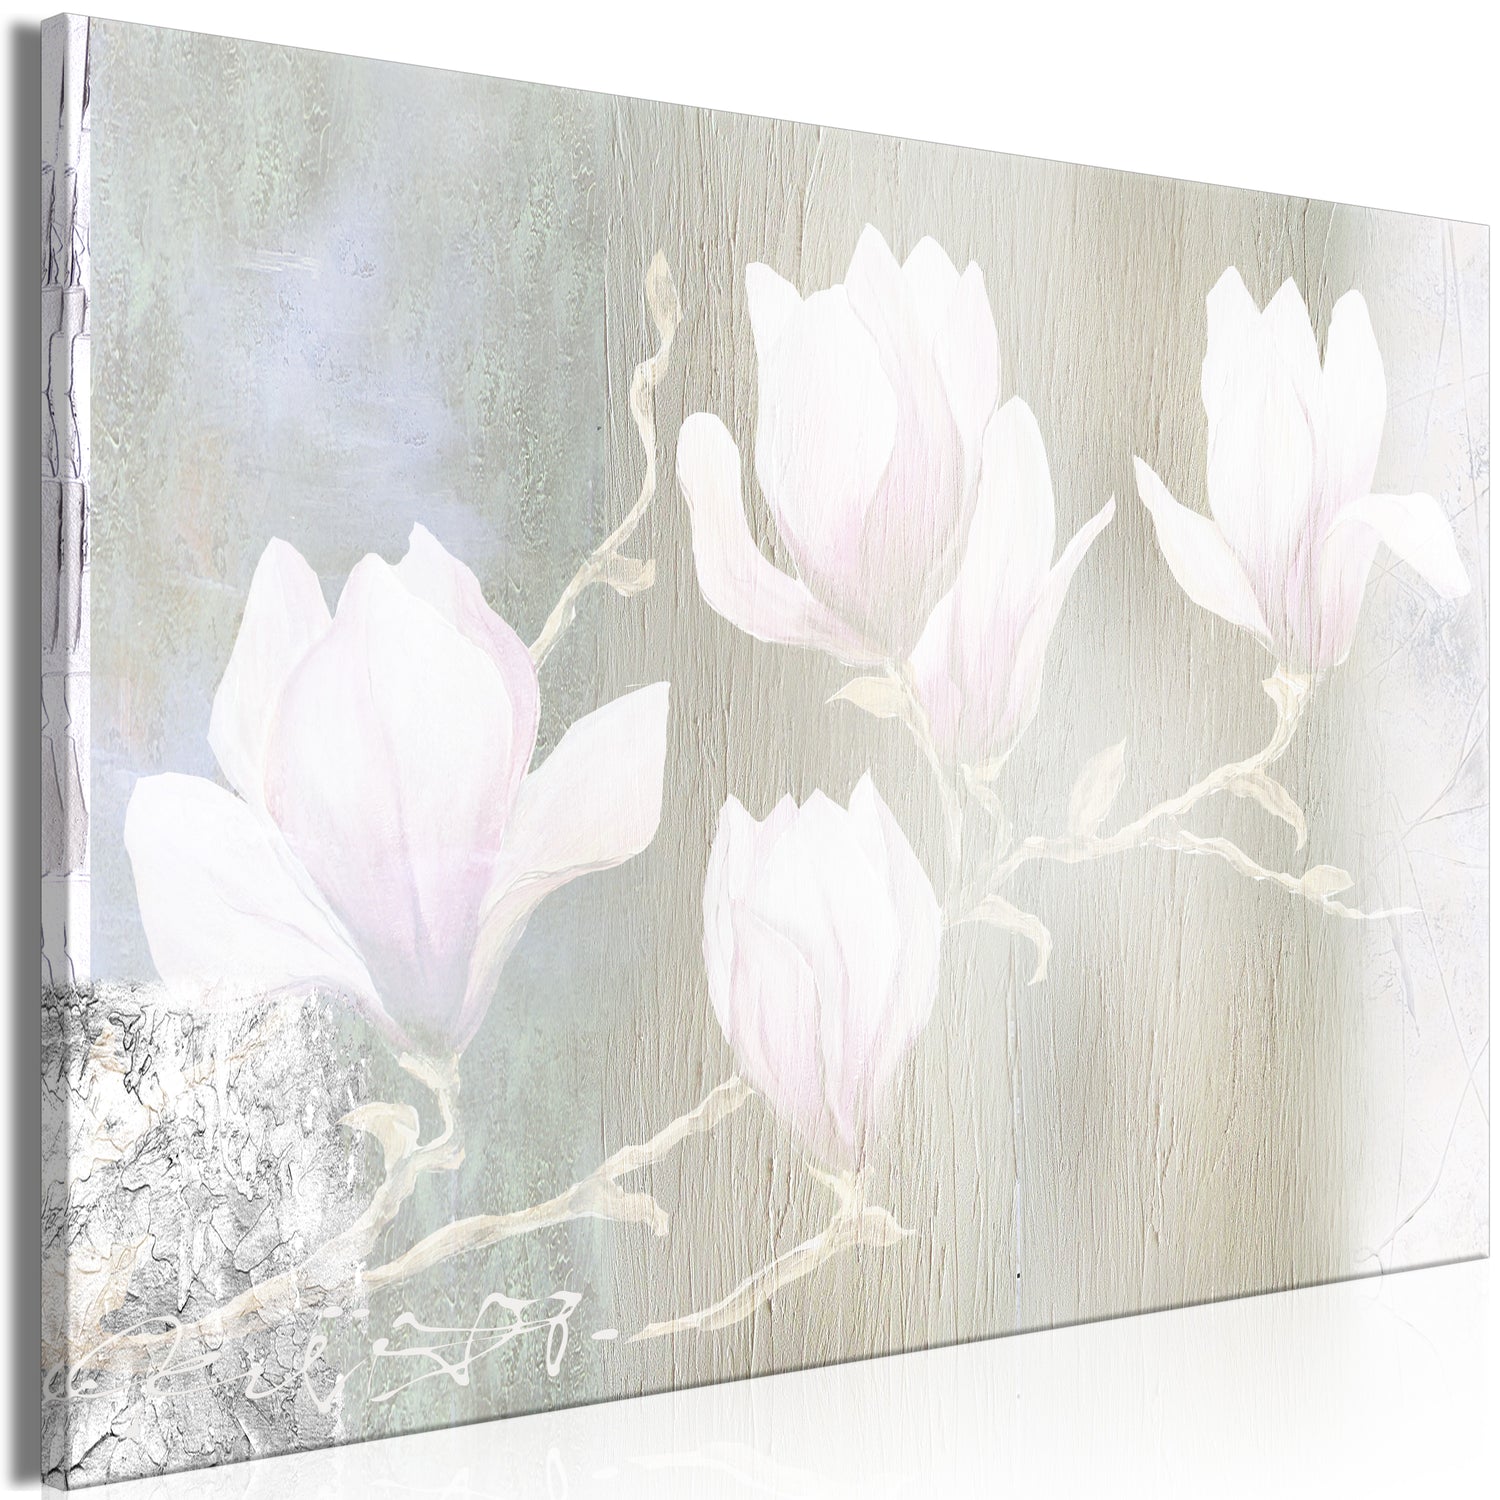 Floral Canvas Wall Art - White Magnolias